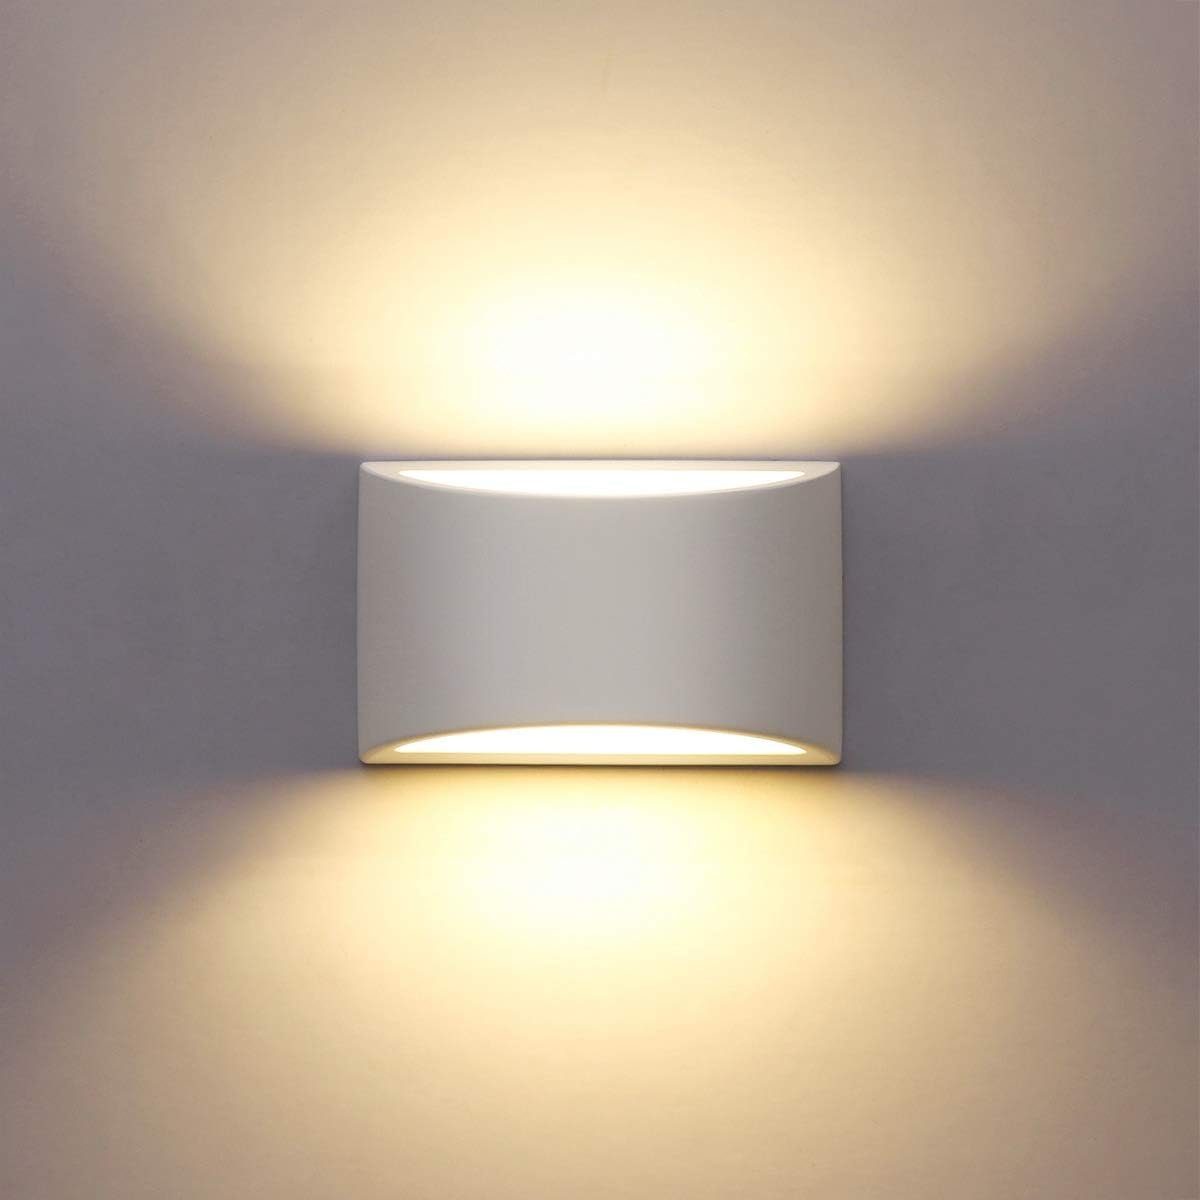 DOPWii Wandleuchte Wandleuchte,moderne LED-Wandlampe,5W Gipsleuchte,warmweißes Wandlicht